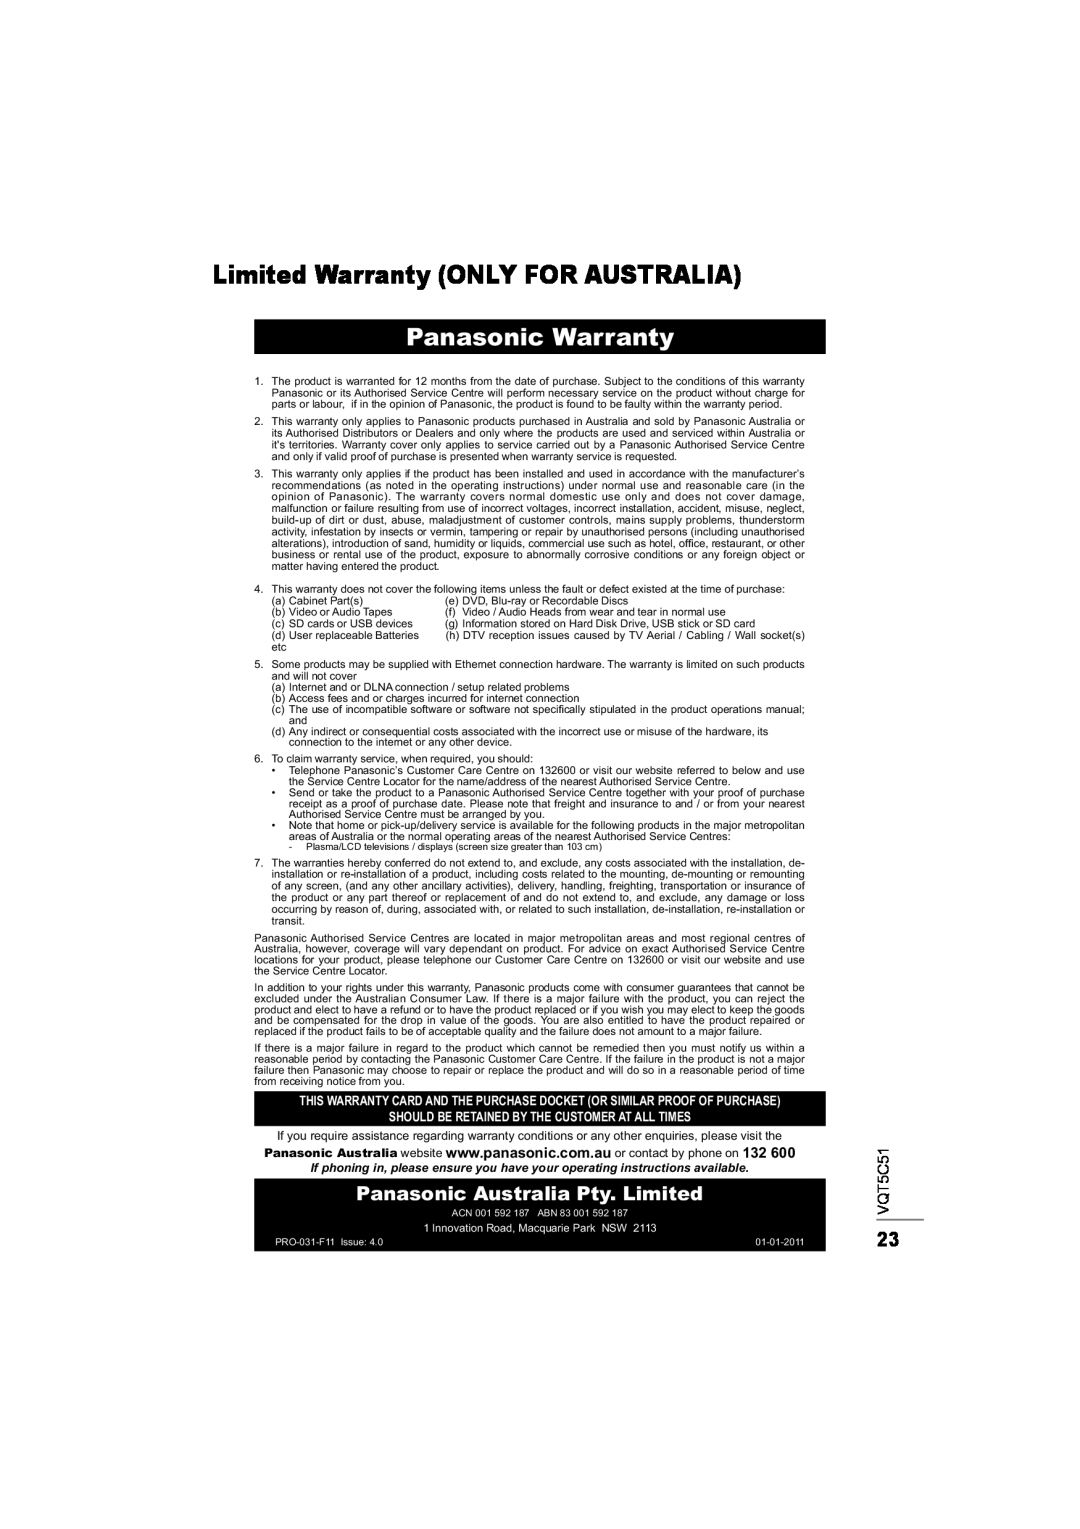 Panasonic SC-NA30/SC-NA10 manual Limited Warranty ONLY FOR AUSTRALIA, Panasonic Warranty, Panasonic Australia Pty. Limited 